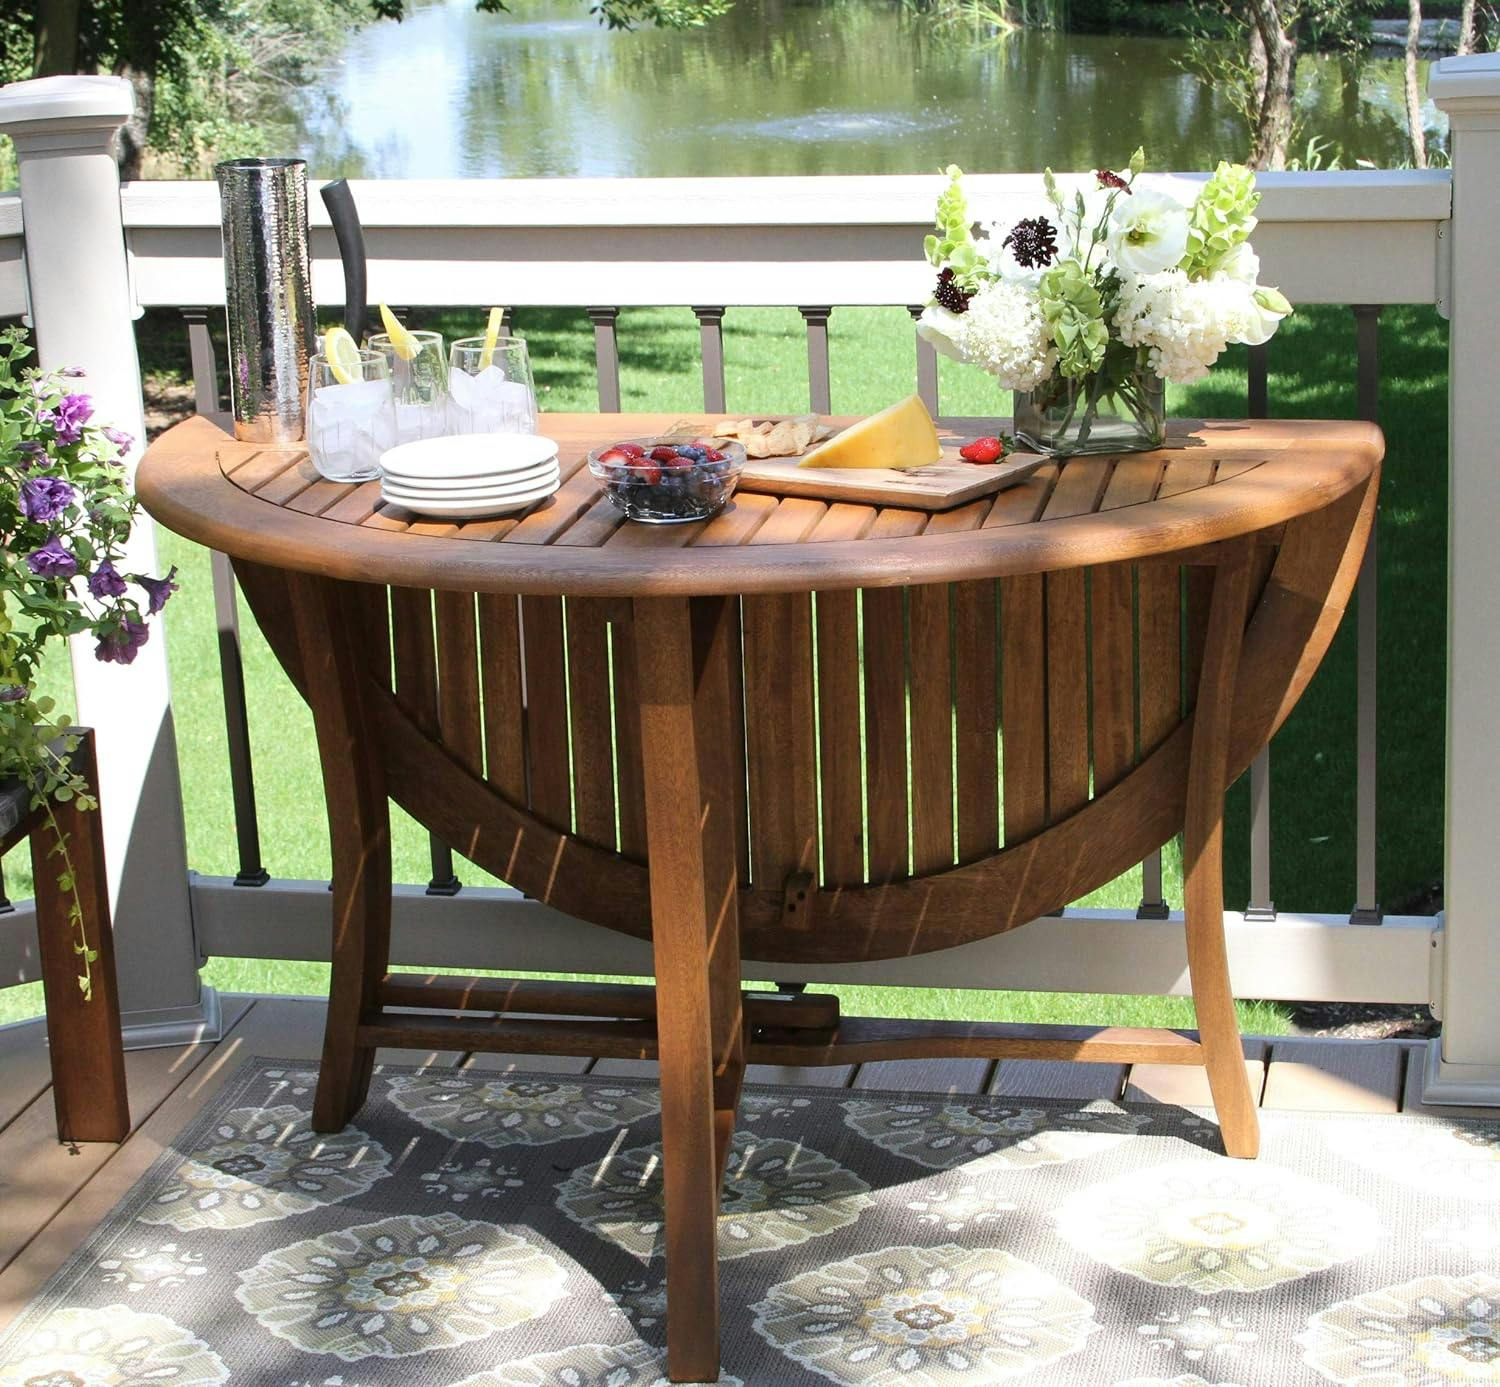 Eilaf 48" Round Folding Eucalyptus Outdoor Table with Umbrella Hole